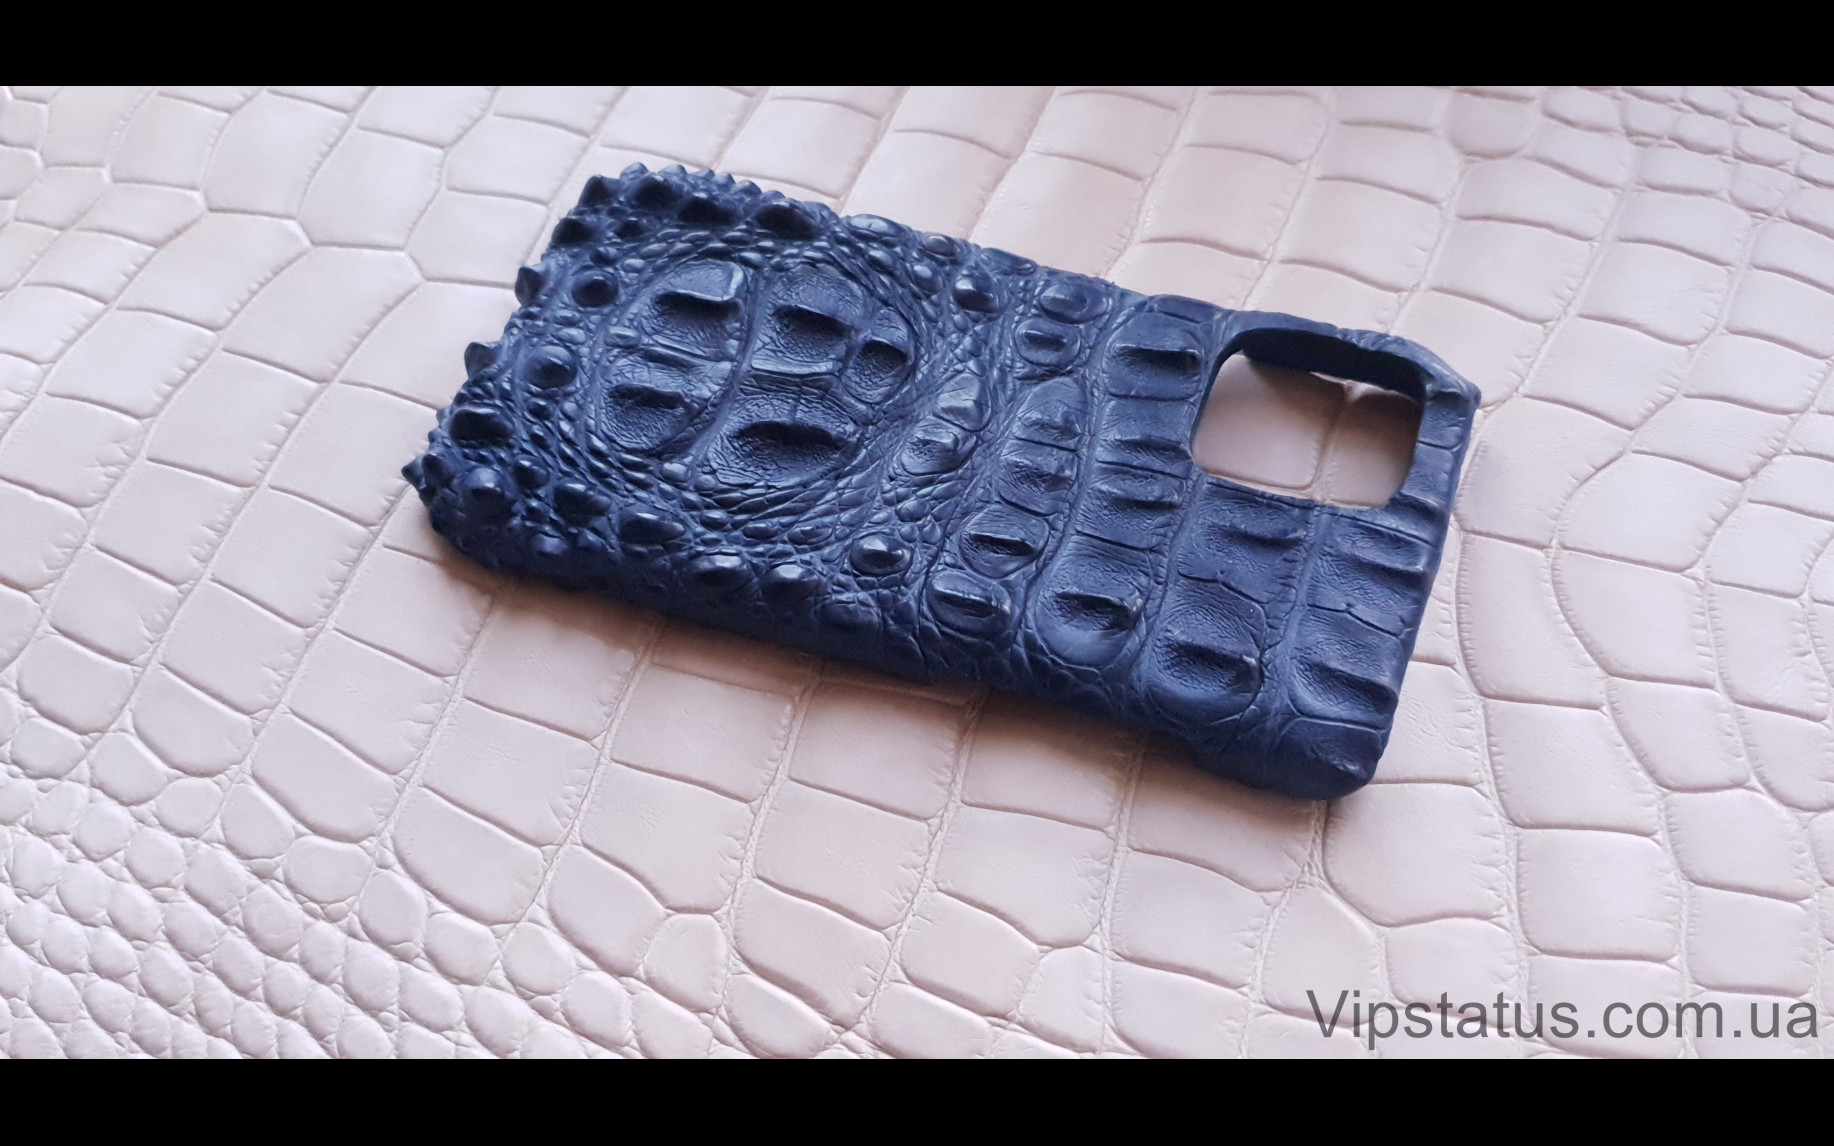 Elite Blue King Премиум чехол IPhone 11 12 Pro Max кожа крокодила Blue King Premium case IPhone 11 12 Pro Max Crocodile leather image 2